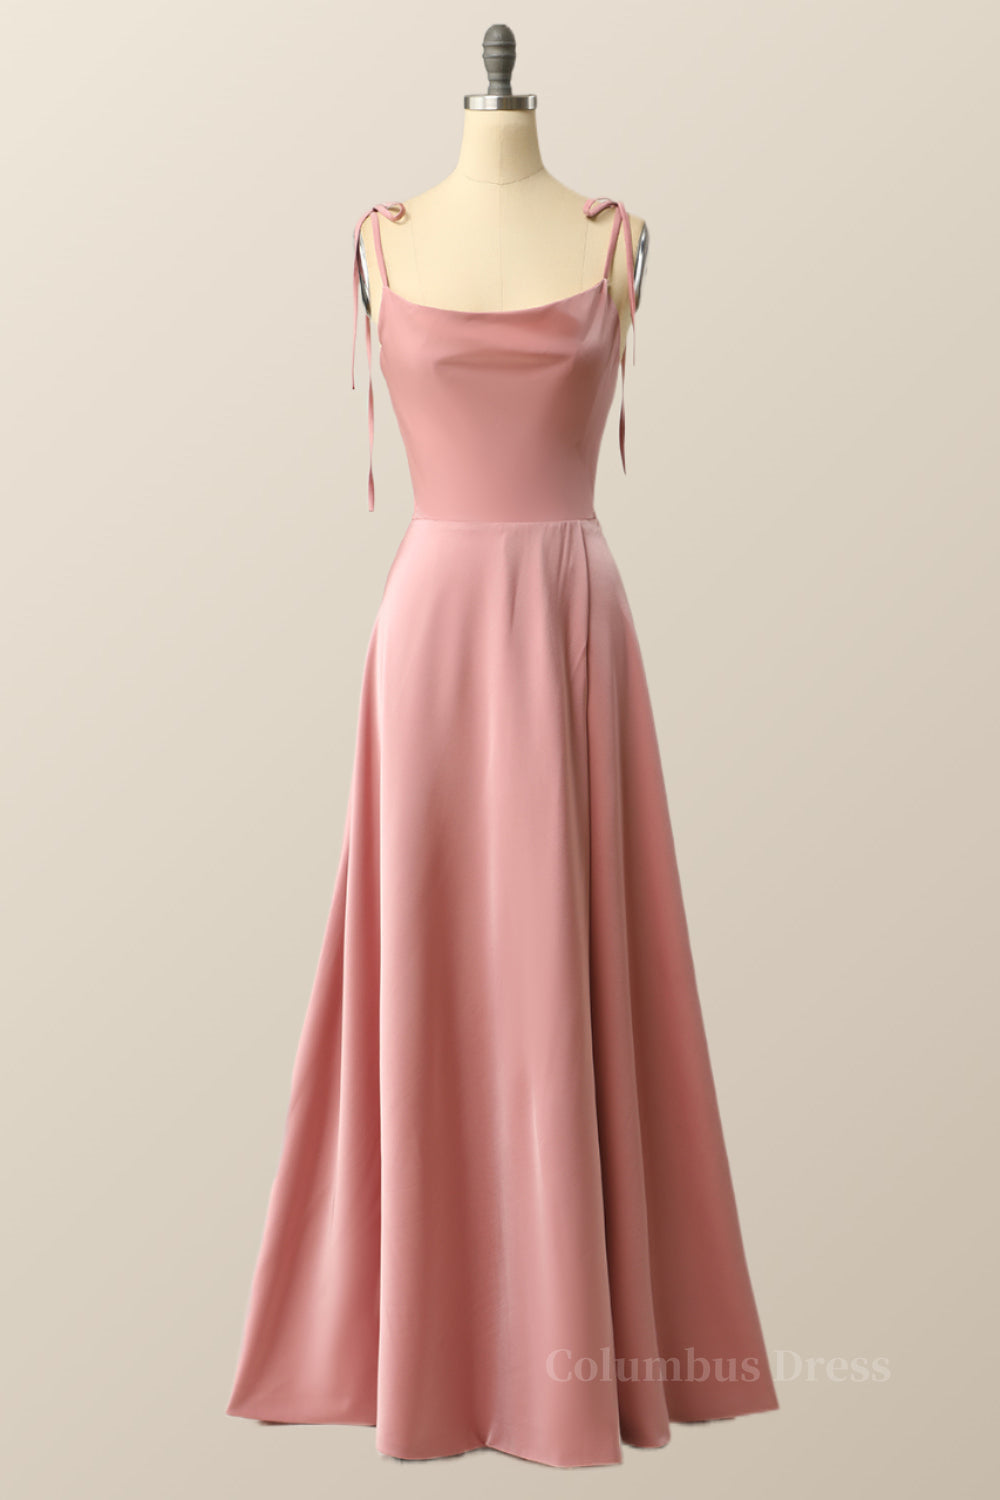 Bridesmaid Dresses Formal, Blush Pink A-line Full Length Long Prom Dress